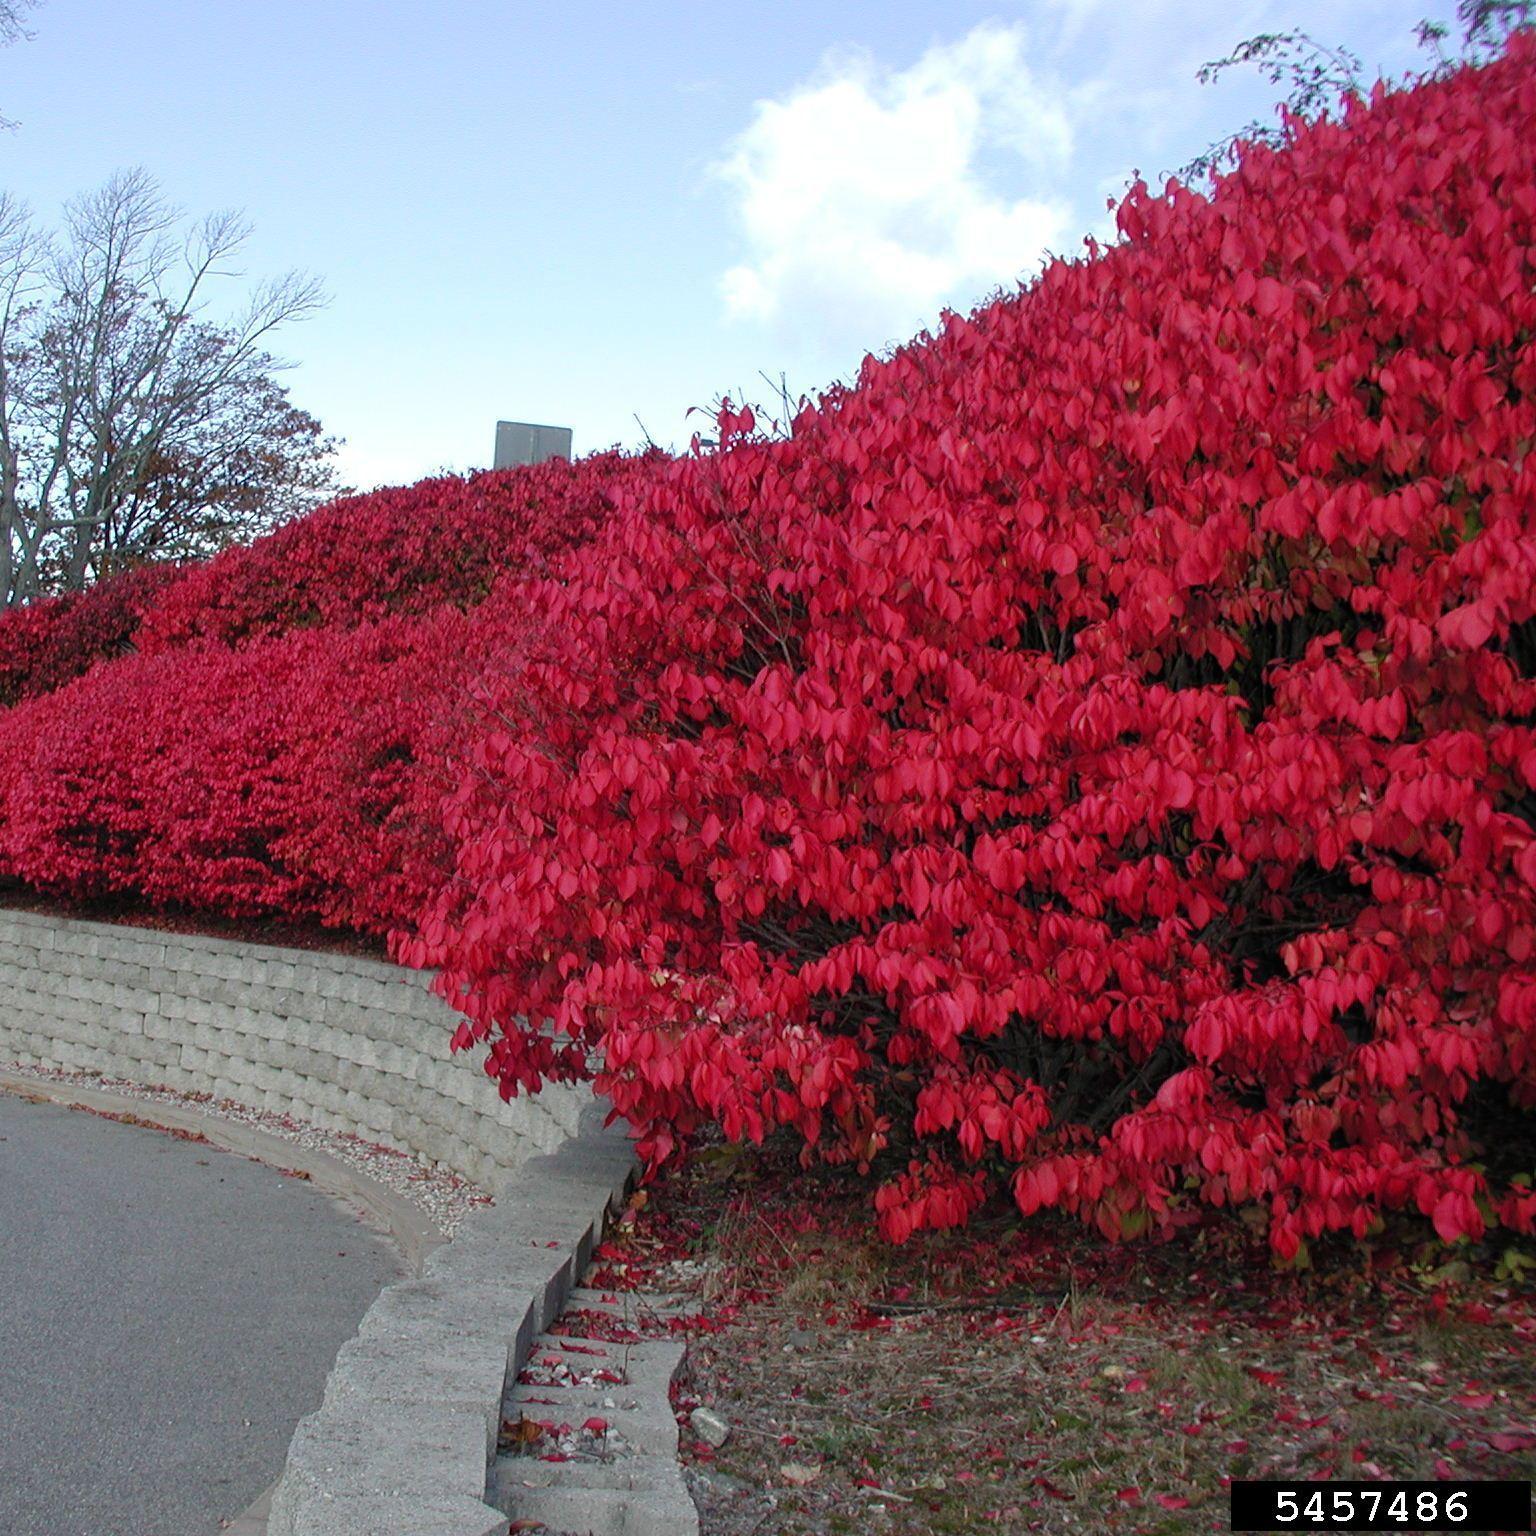 invasive burning bush shrubs showing red fall foliage